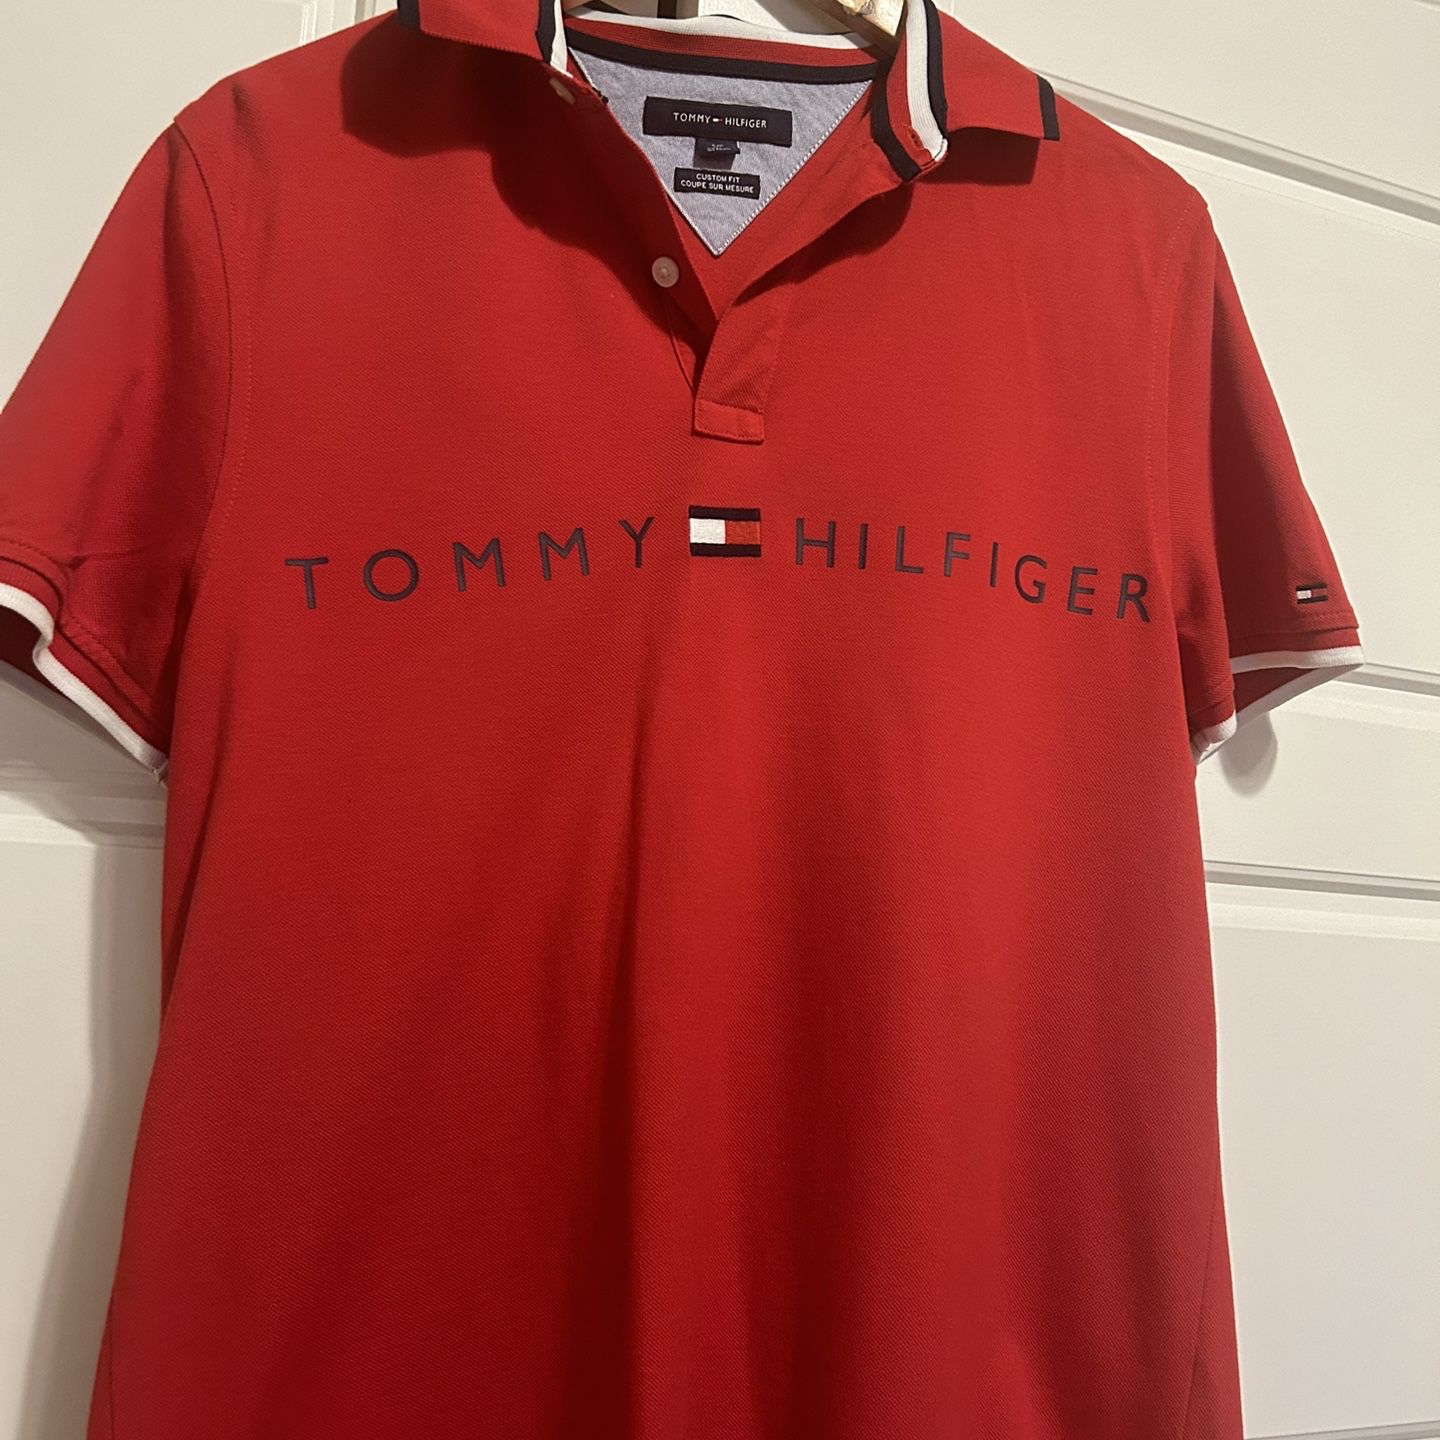 Mens Small Tommy Hilfiger Collar Shirt 